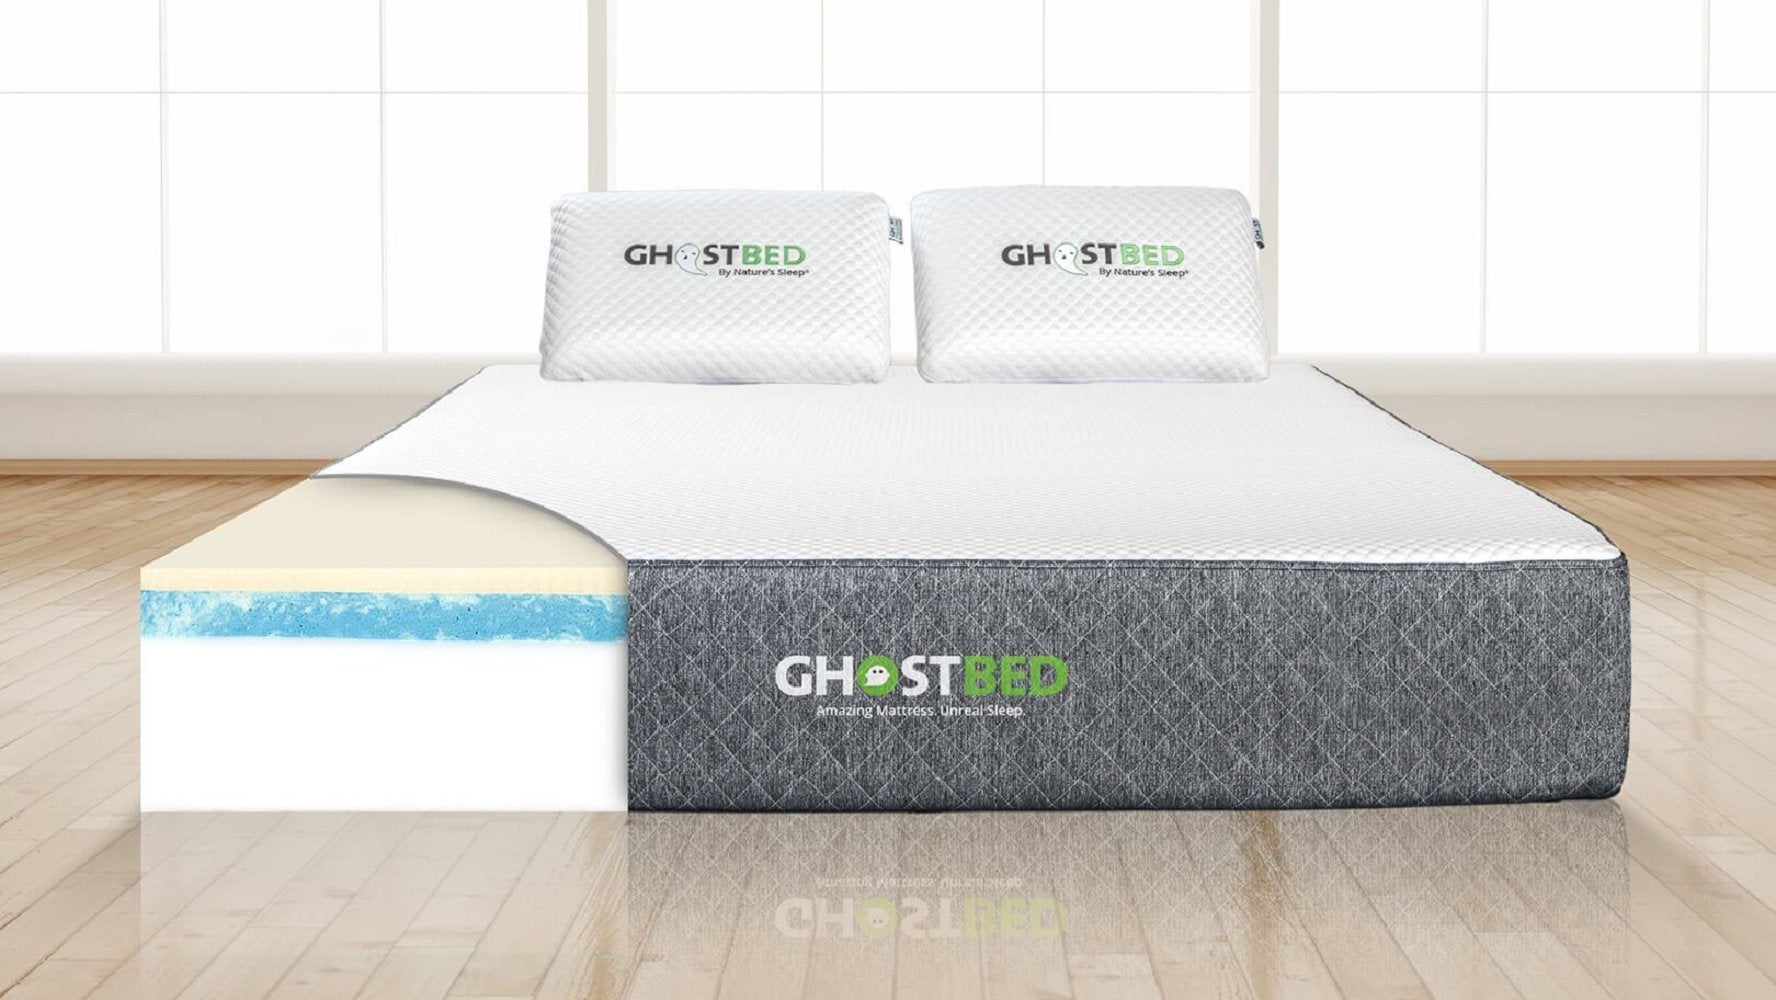 ghostbed gel memory foam mattress stores